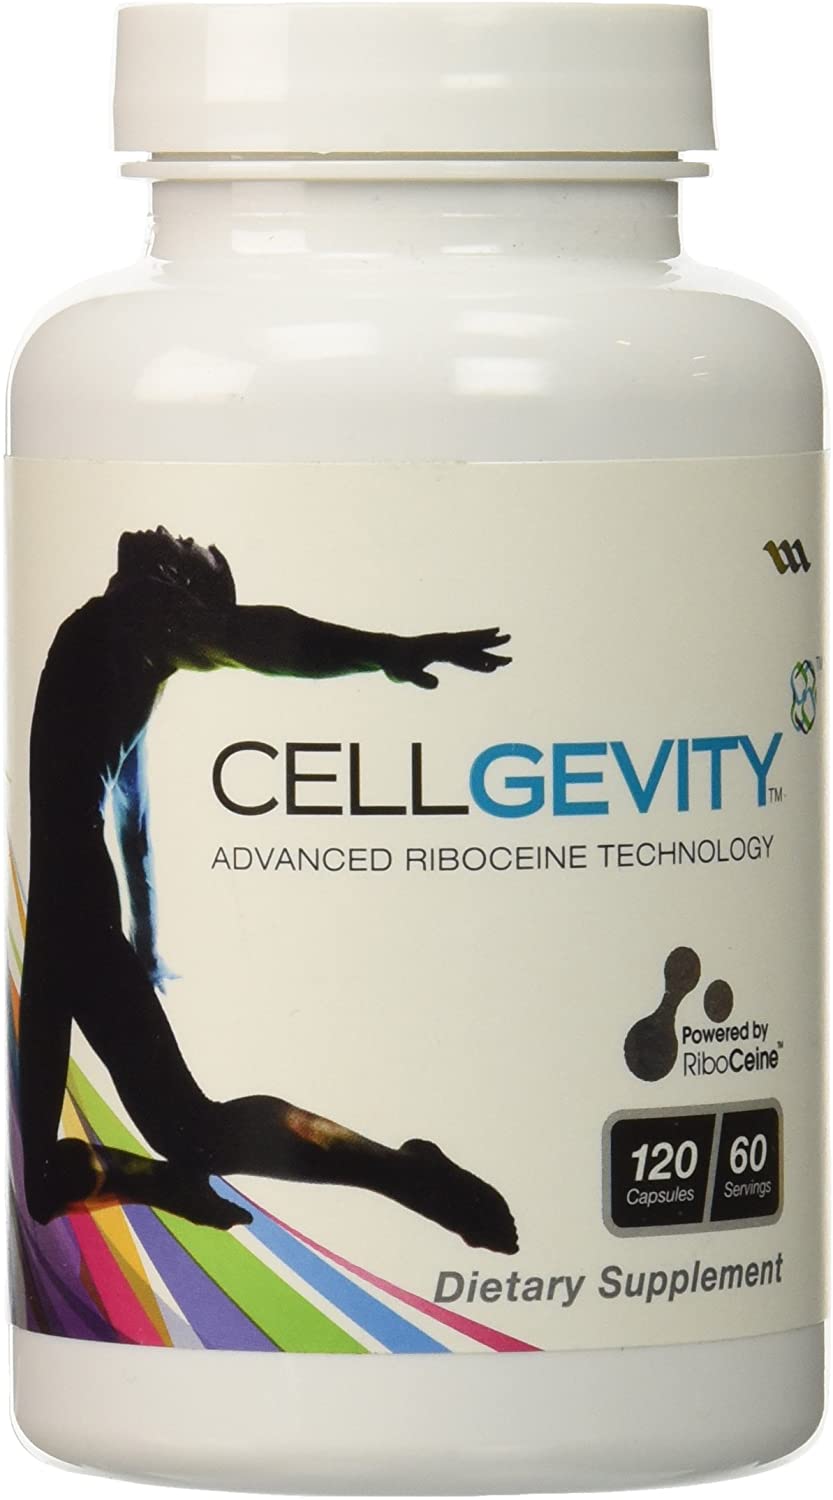 Cellgevity Advanced Riboceine Technology 120 Tablet-0